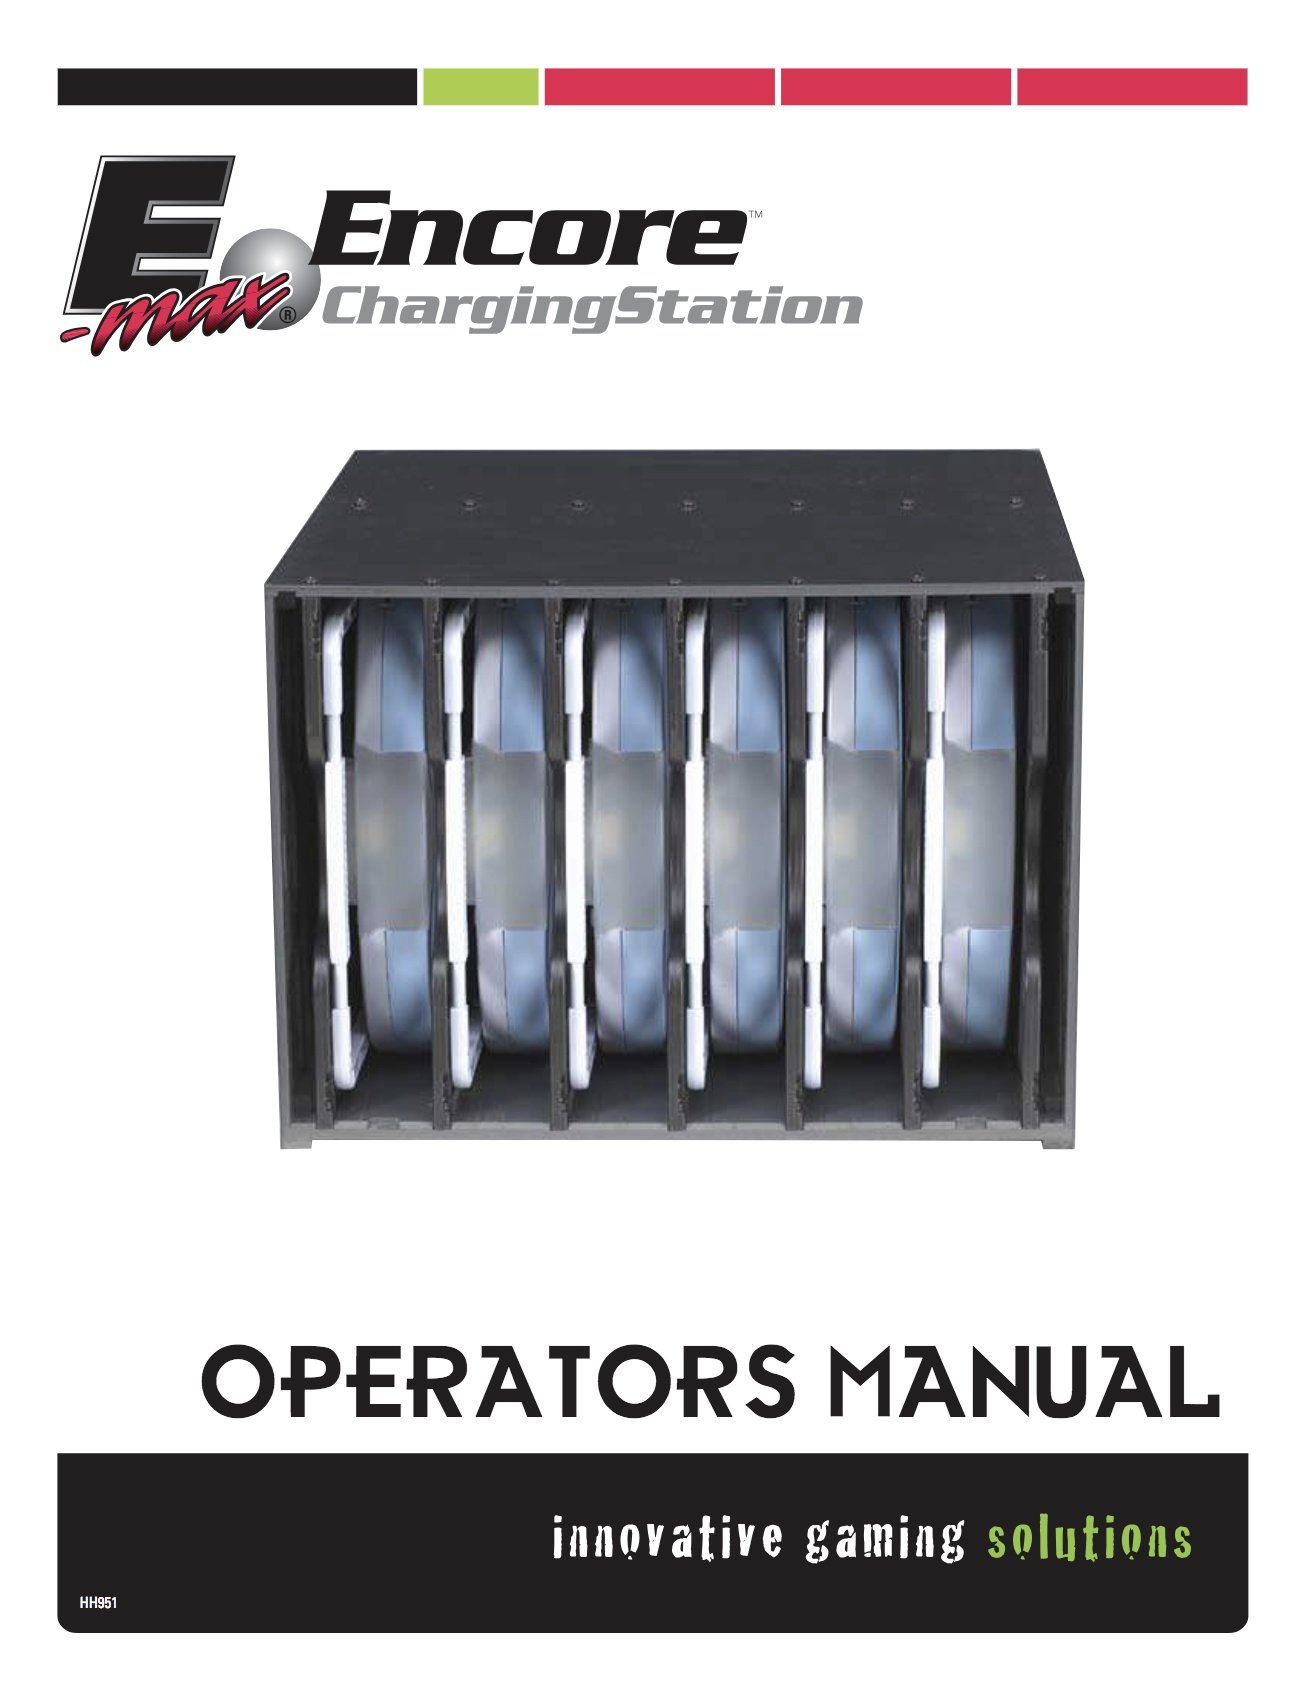 Encore Operators Manual